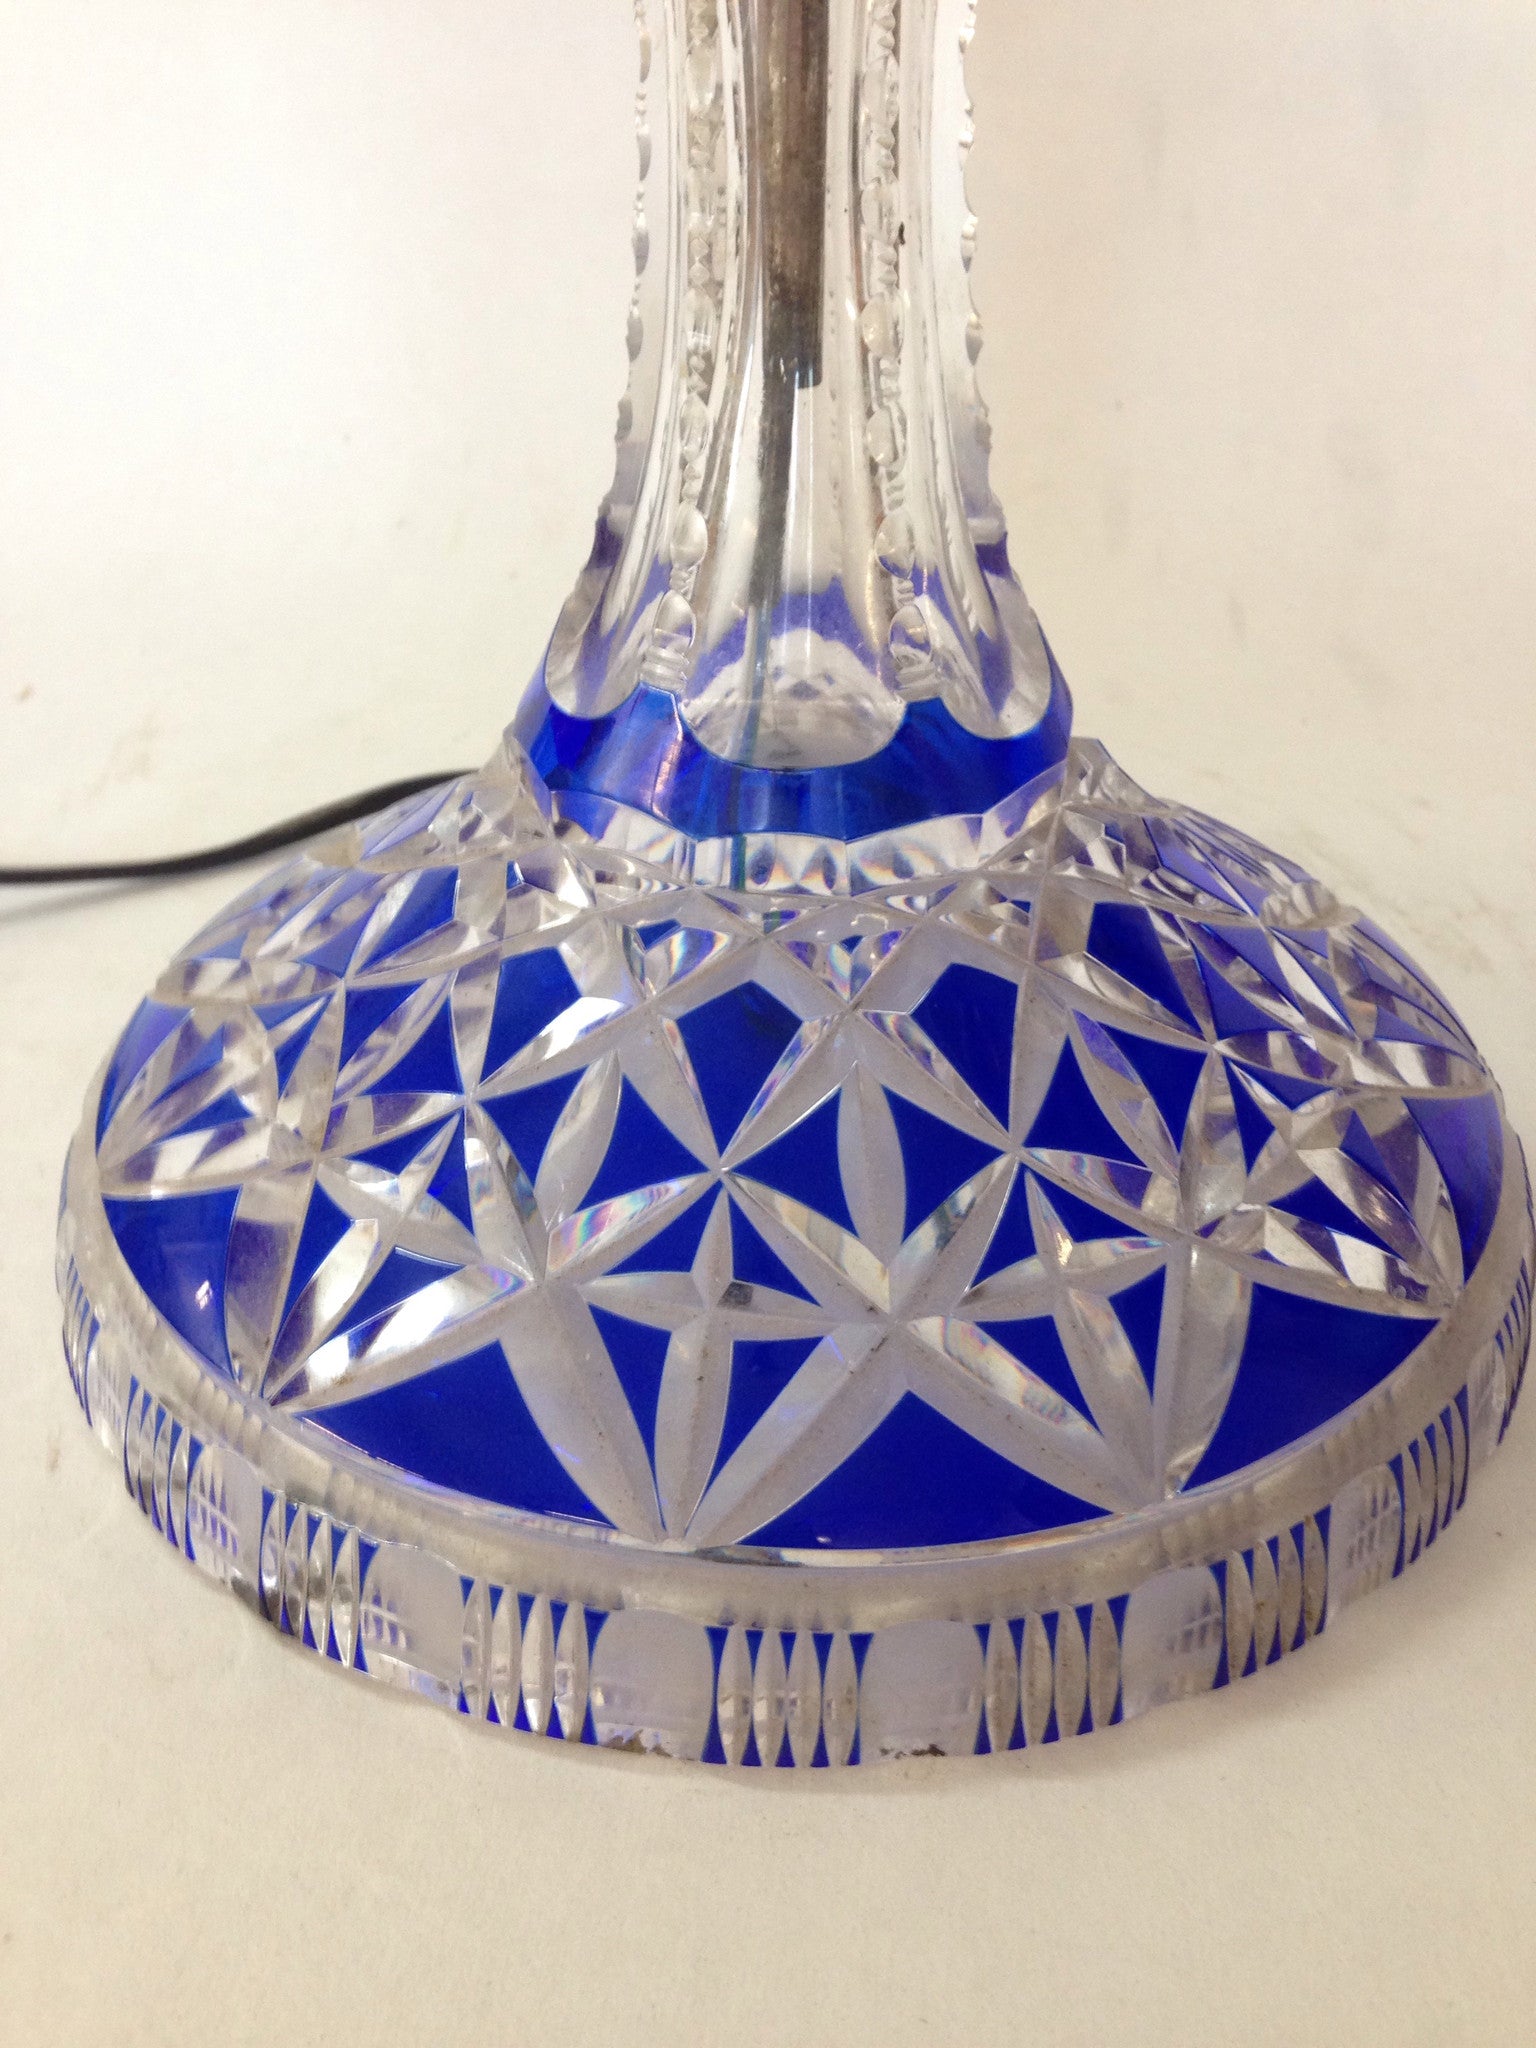 1900's Saint Louis Crystal Lamp